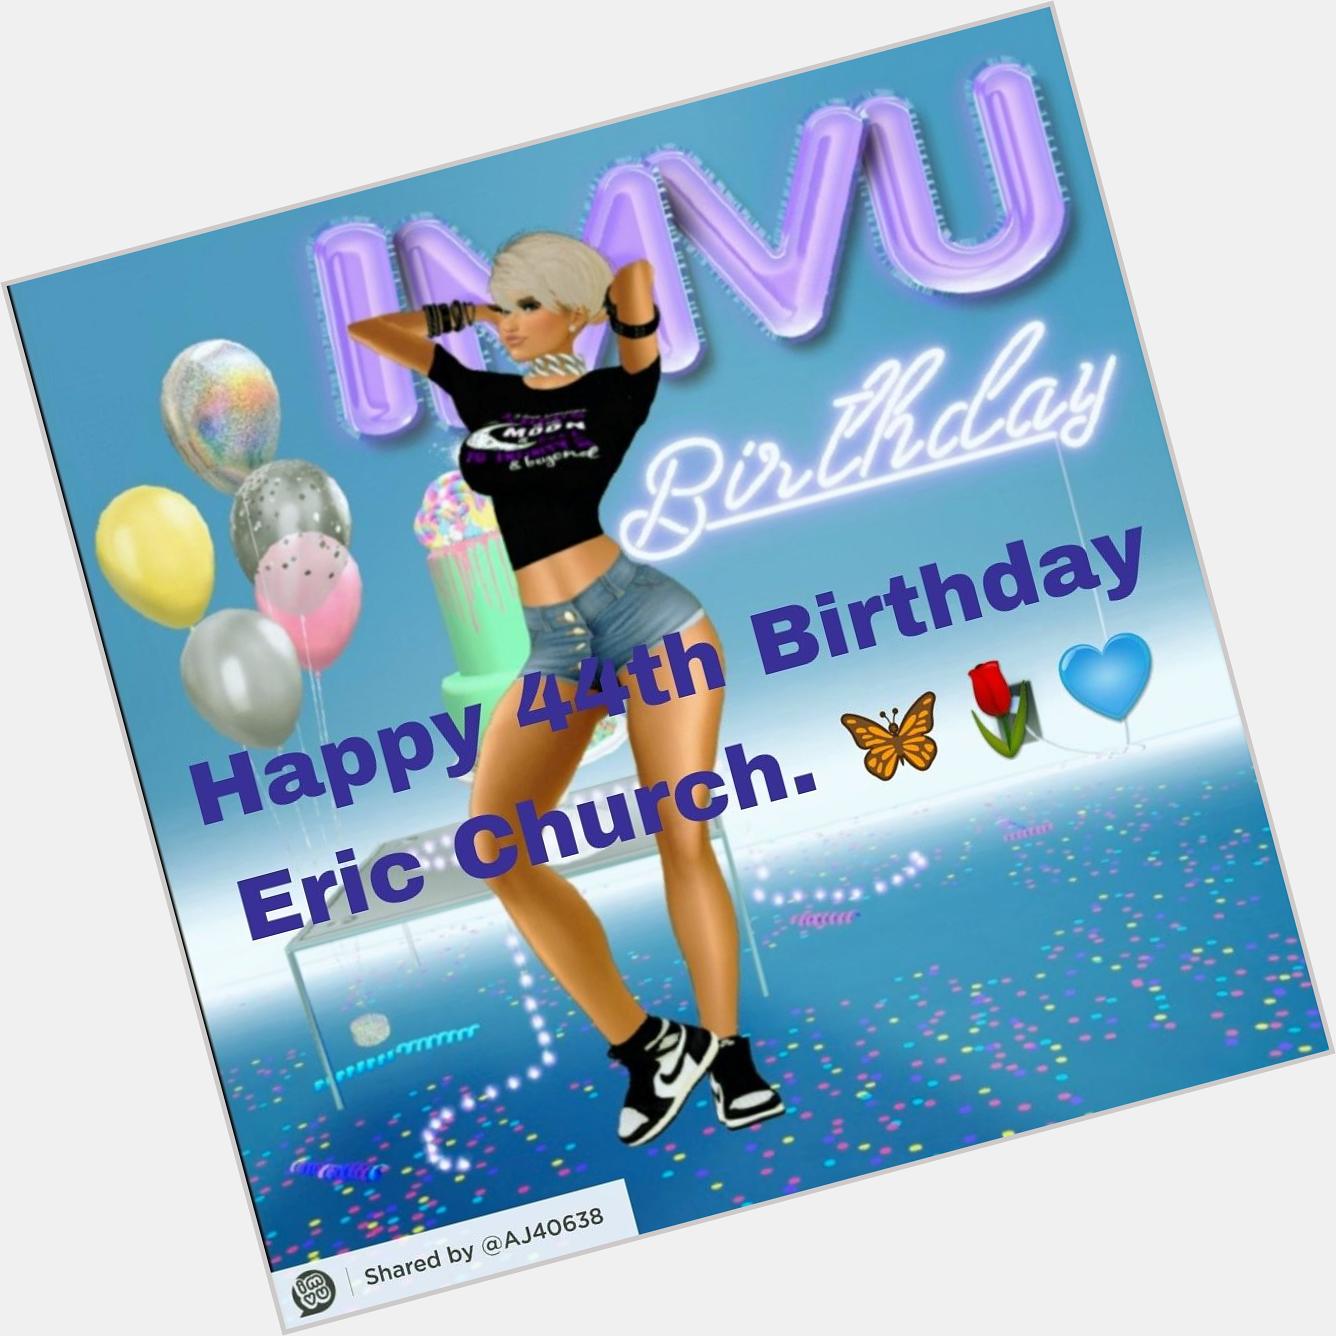 Happy Birthday Eric Church!!  